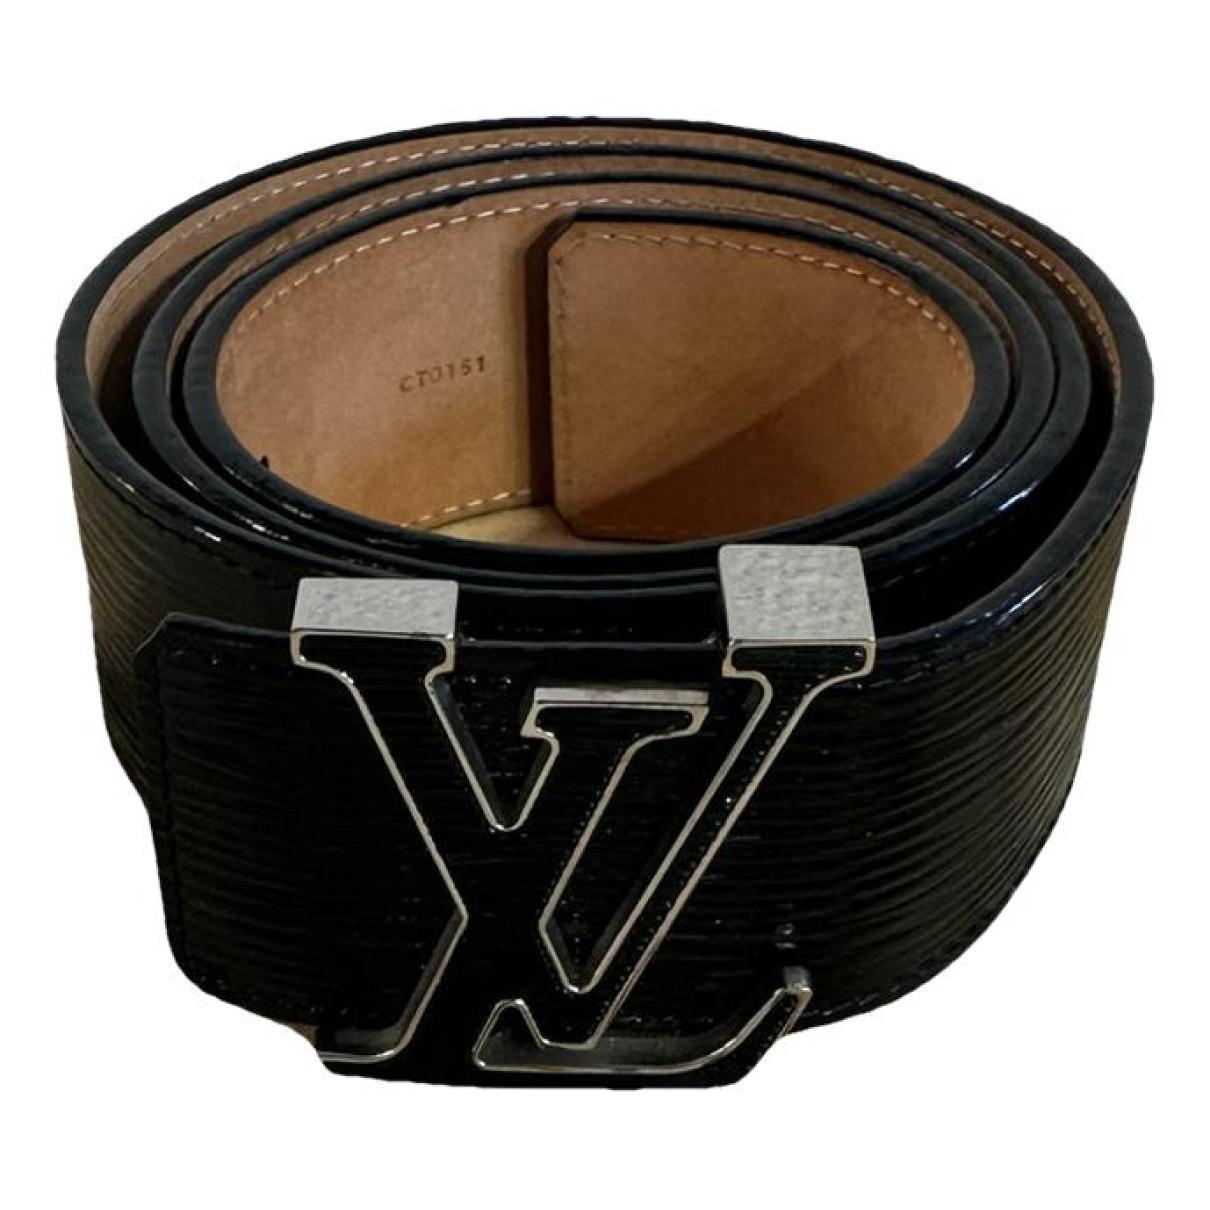 Authentic Louis Vuitton “LV” 20 mm Women's Belt $150 for Sale in